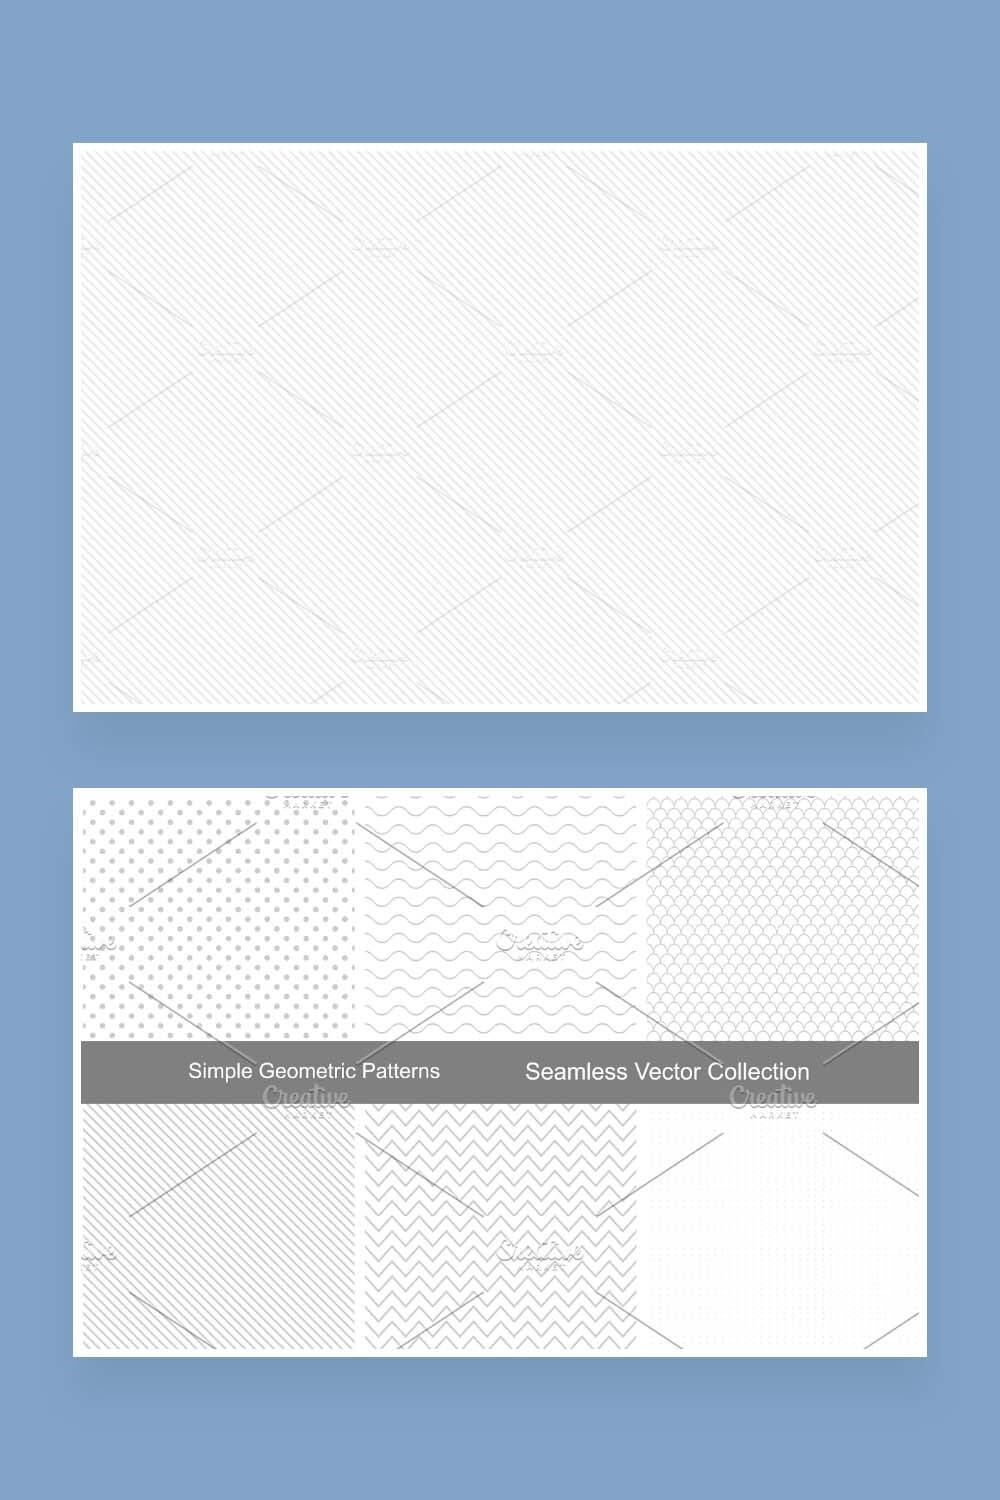 Seamless Geometric Patterns for Pinterest.